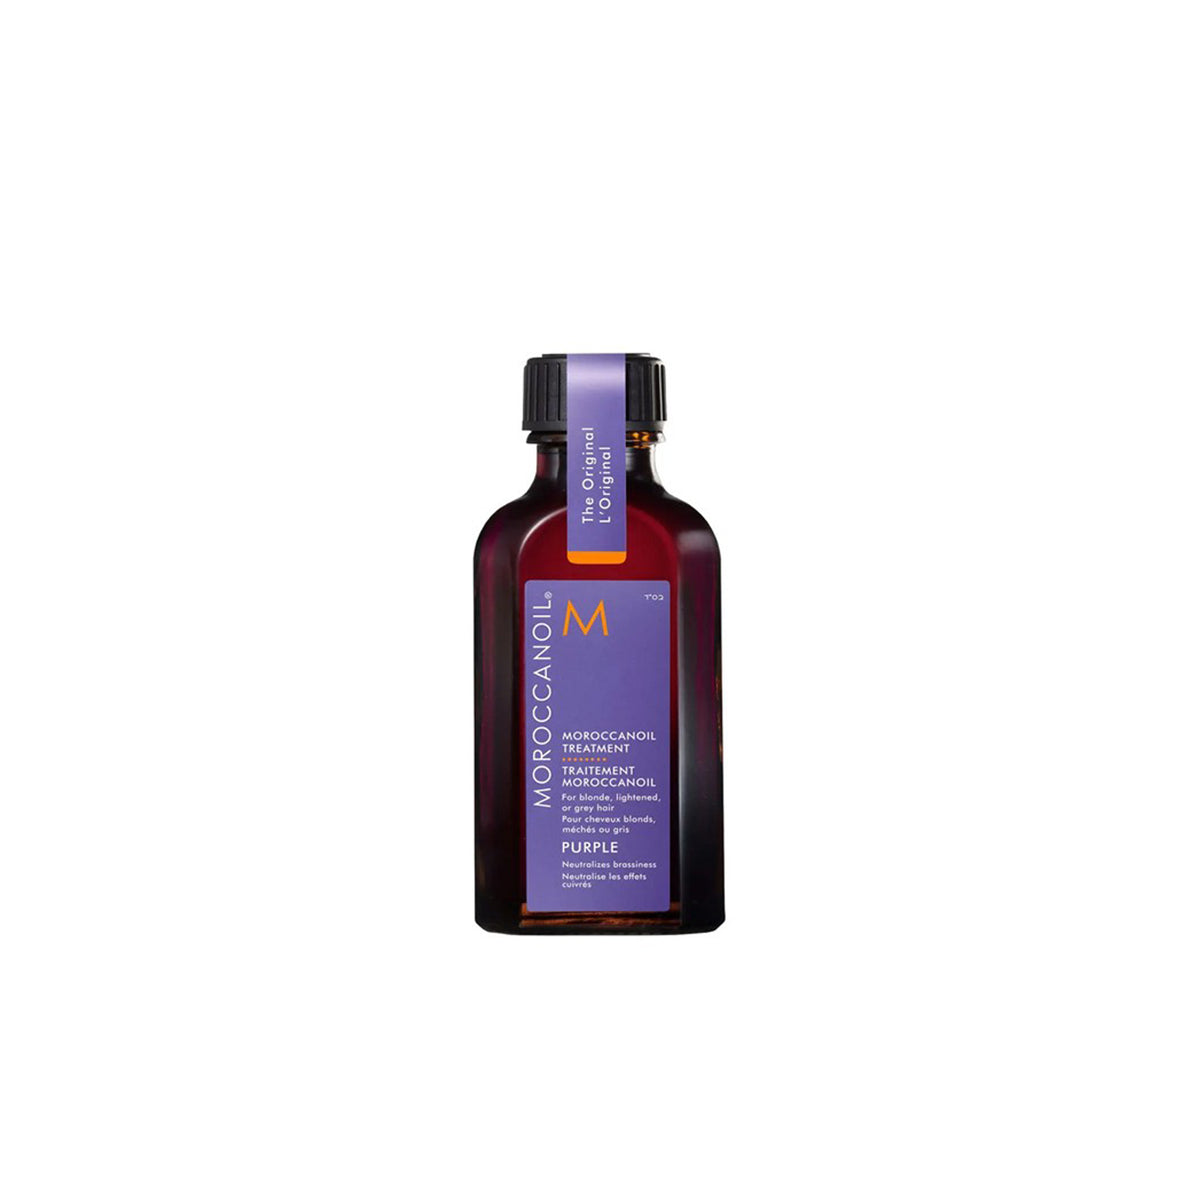 Moroccanoil Purple Treatment 50ml with Pump